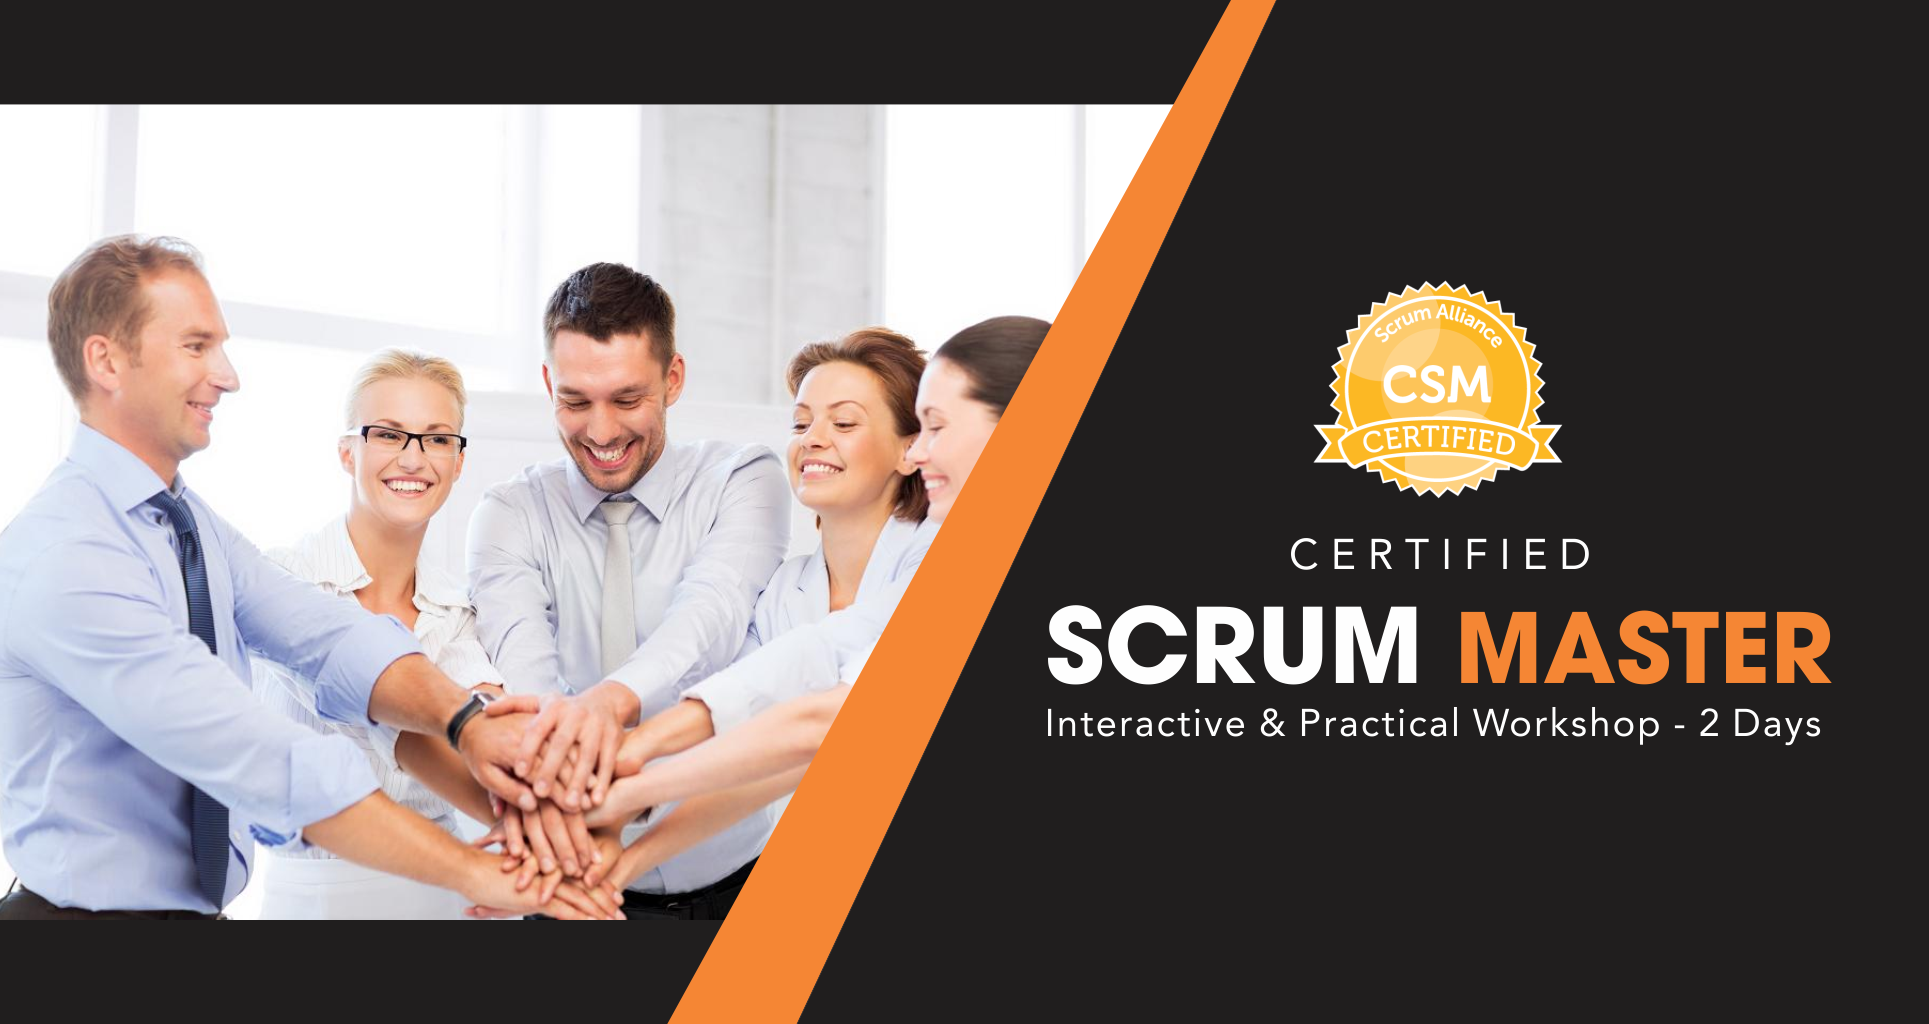 CSM (Certified Scrum Master) certification Training In Las Vegas, NV